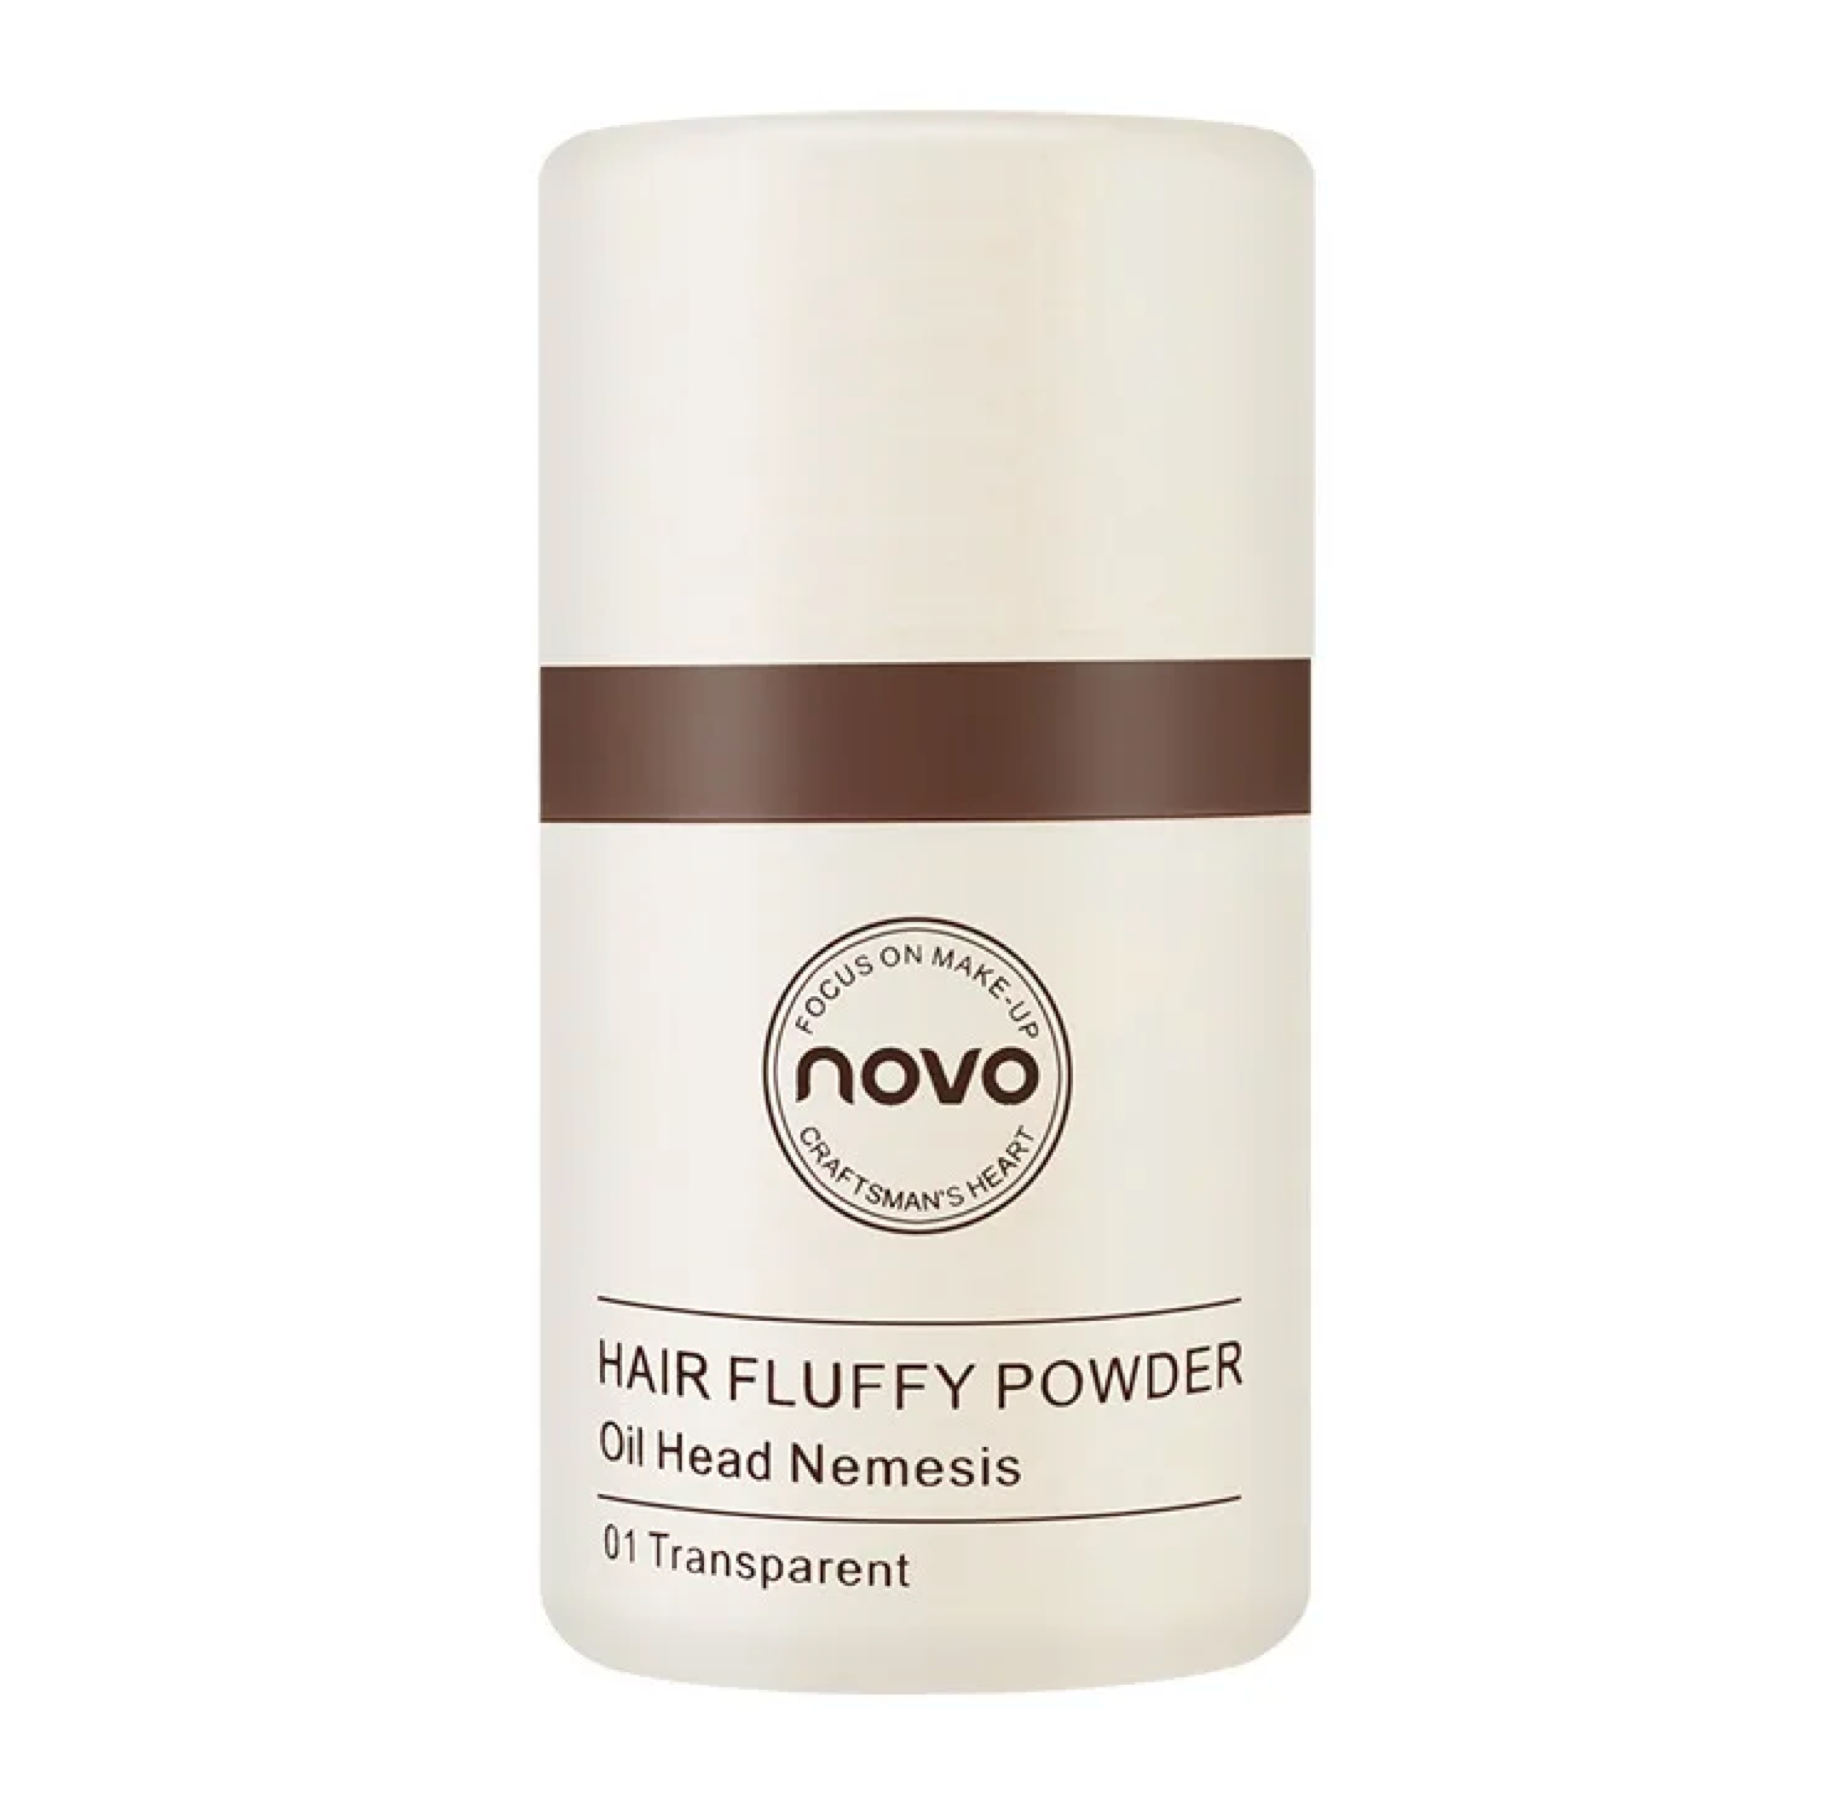 Novo Fluffy Hairline Dry Powder Shampoo Oil Head Nemesis 8.5g